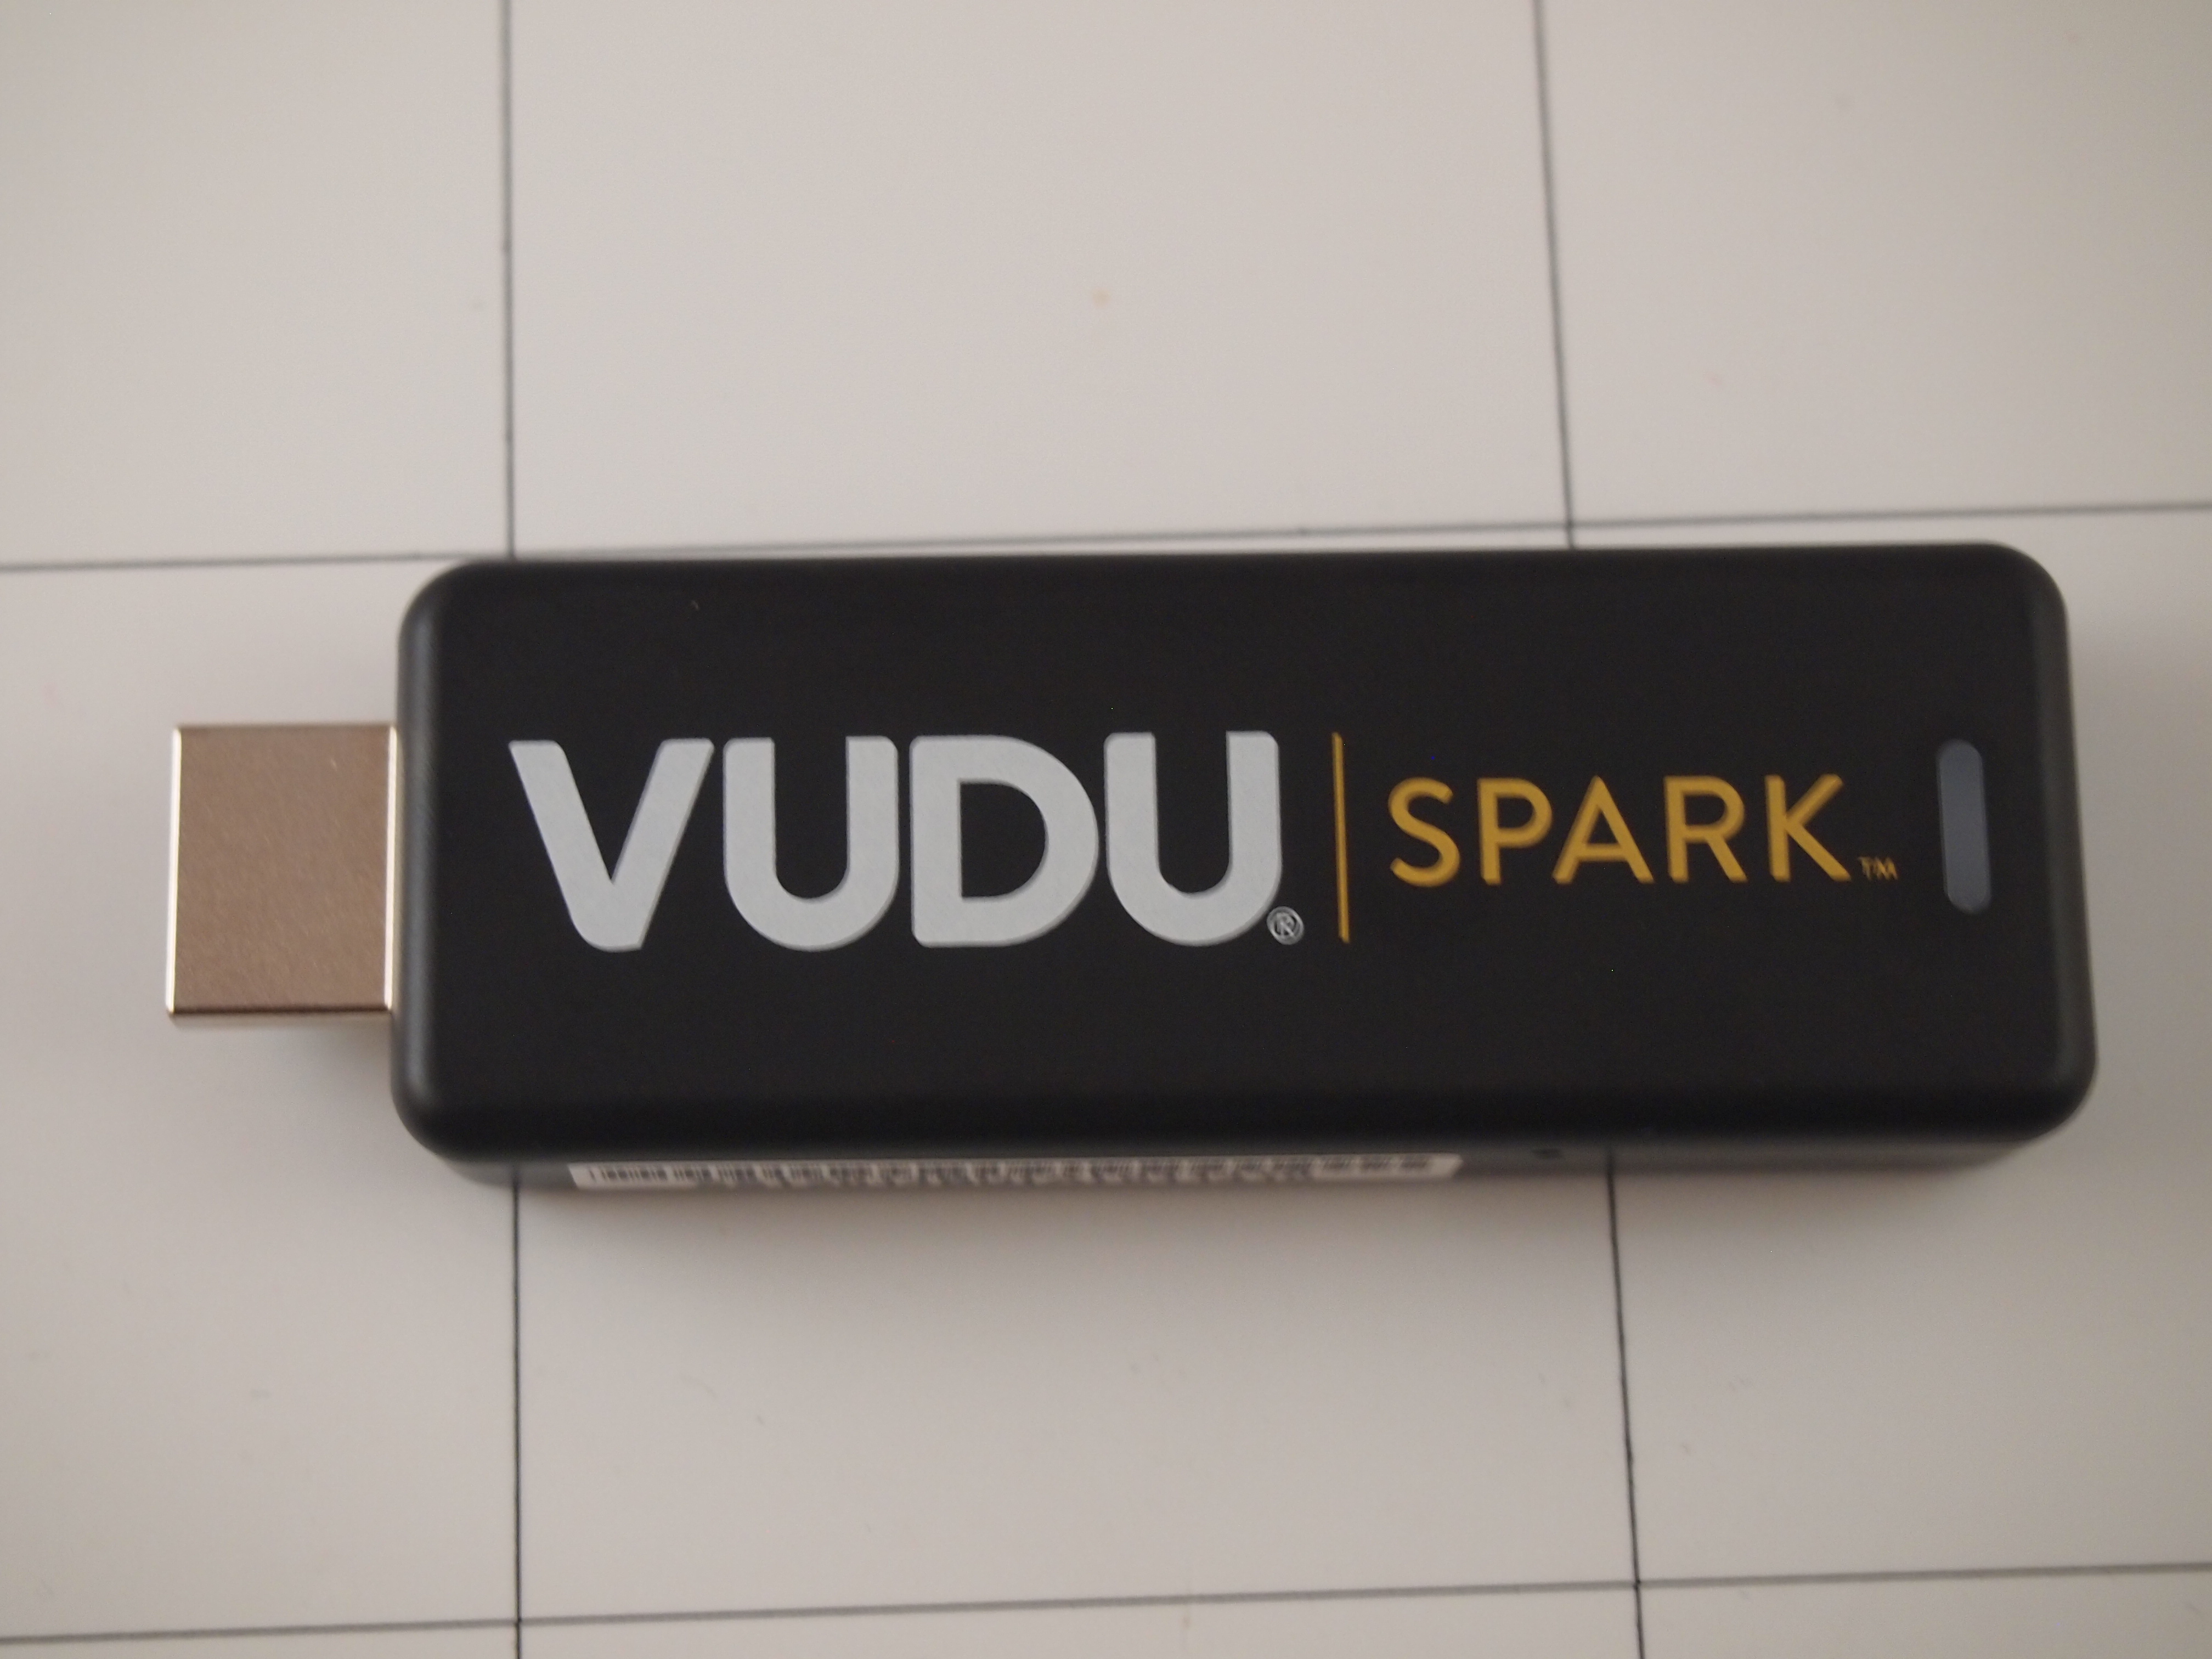 Vudu Spark Teardown 1.JPG